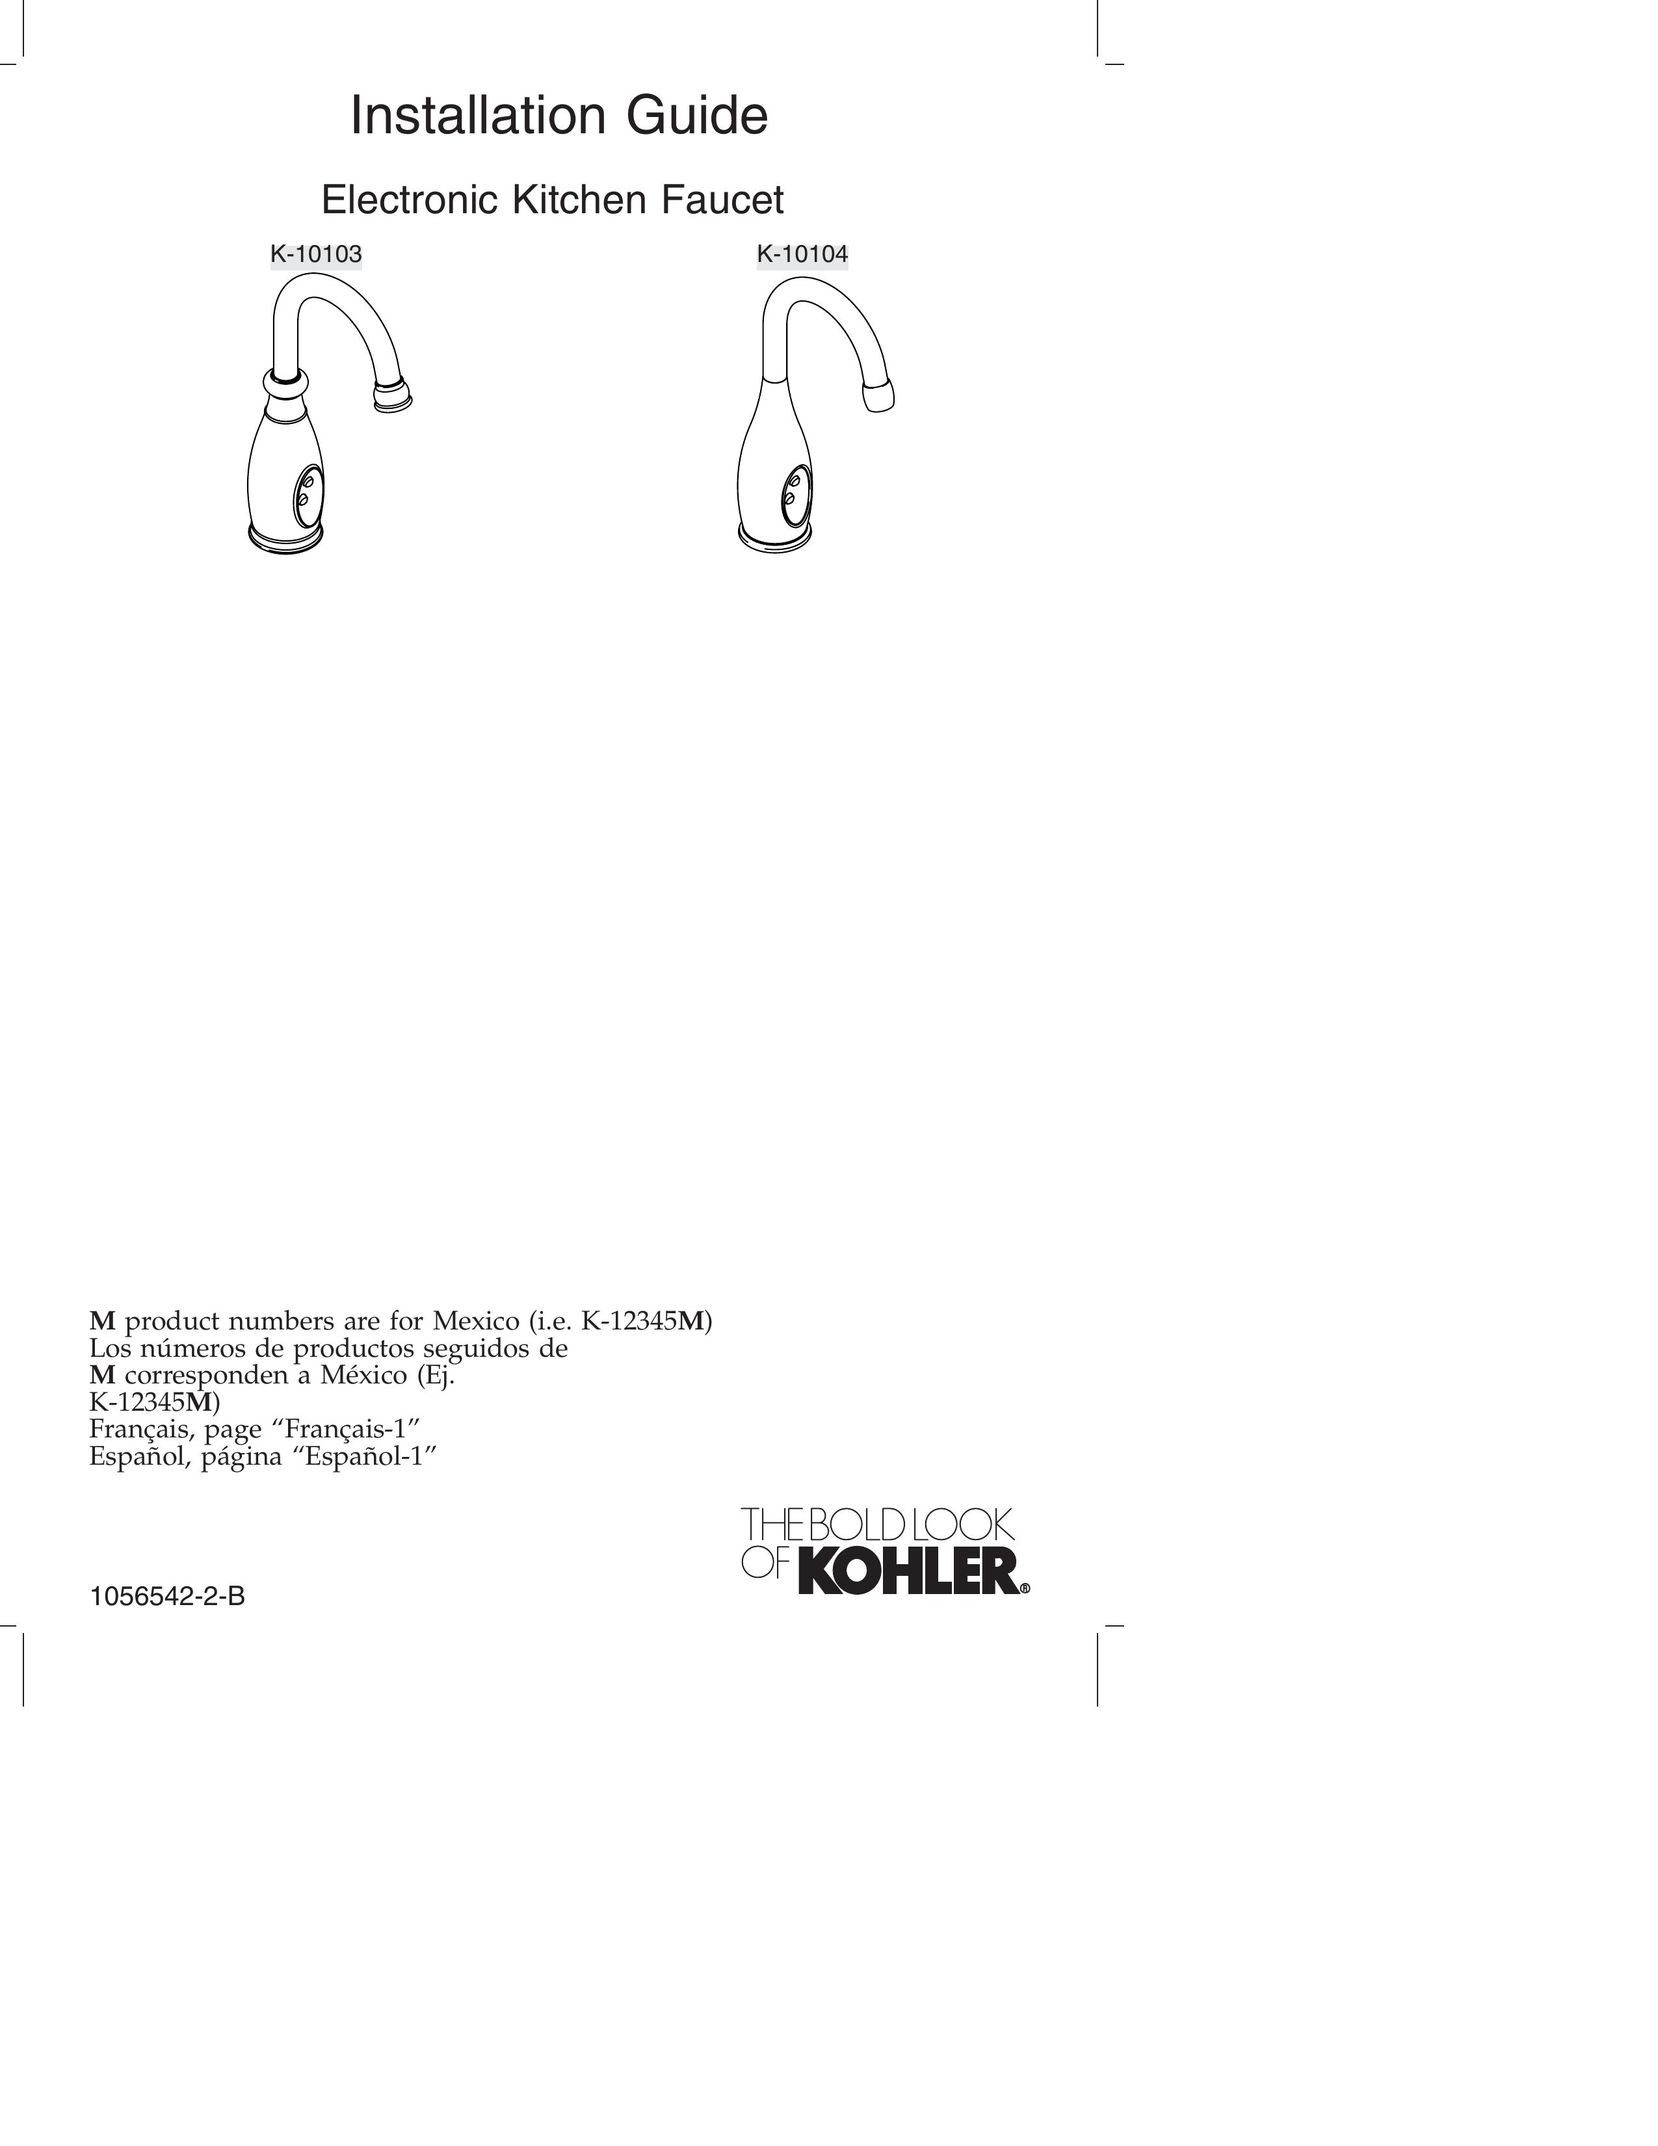 Kohler K-10104 Plumbing Product User Manual